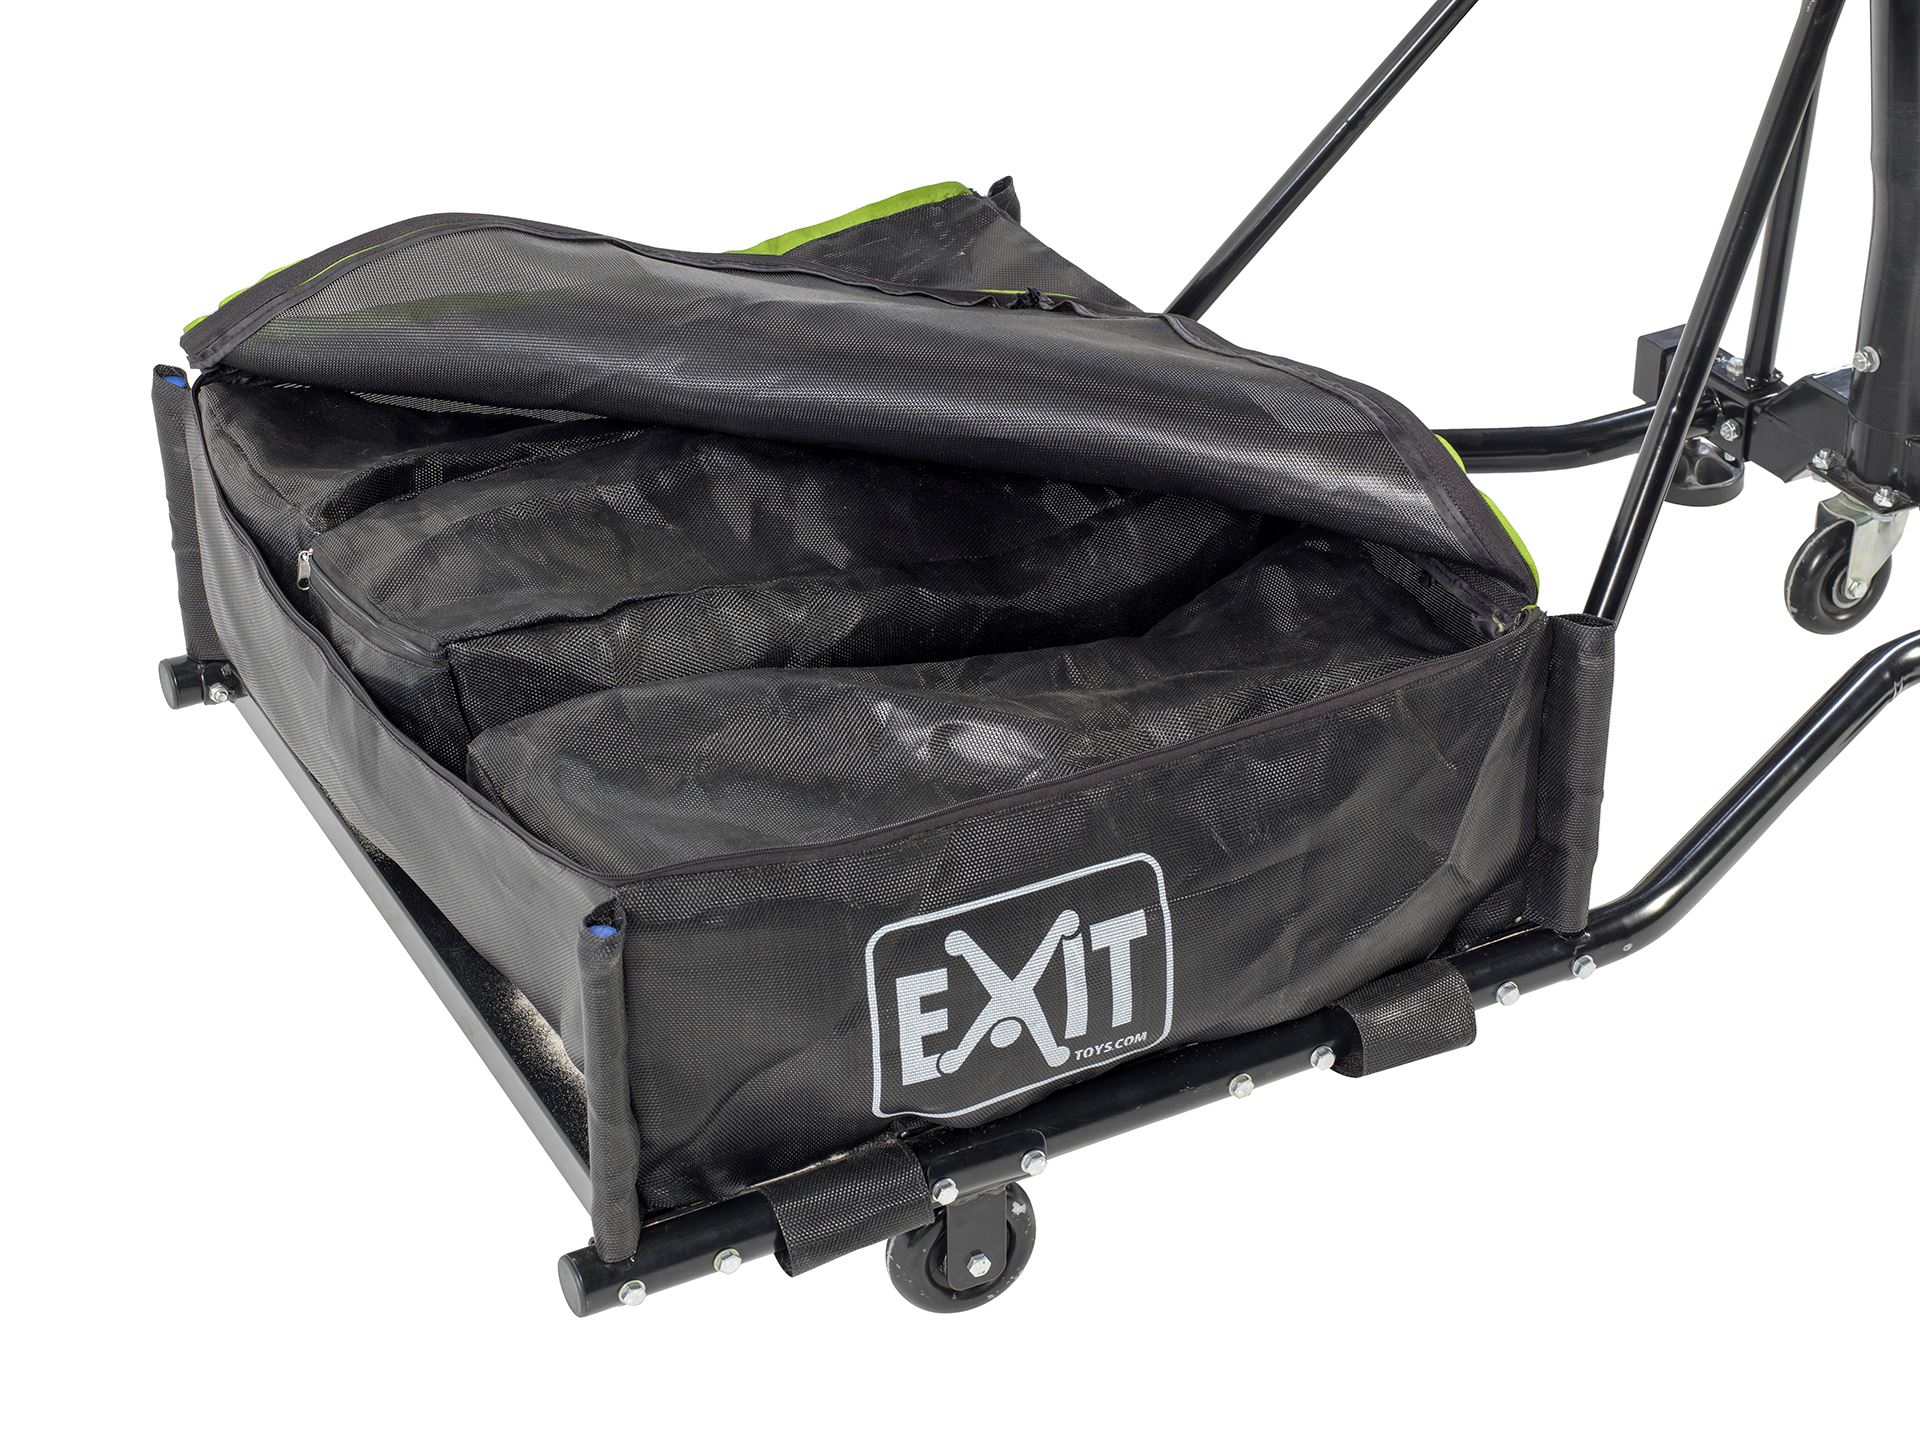 EXIT-Galaxy-verplaatsbaar-basketbalbord-op-wielen-black-edition